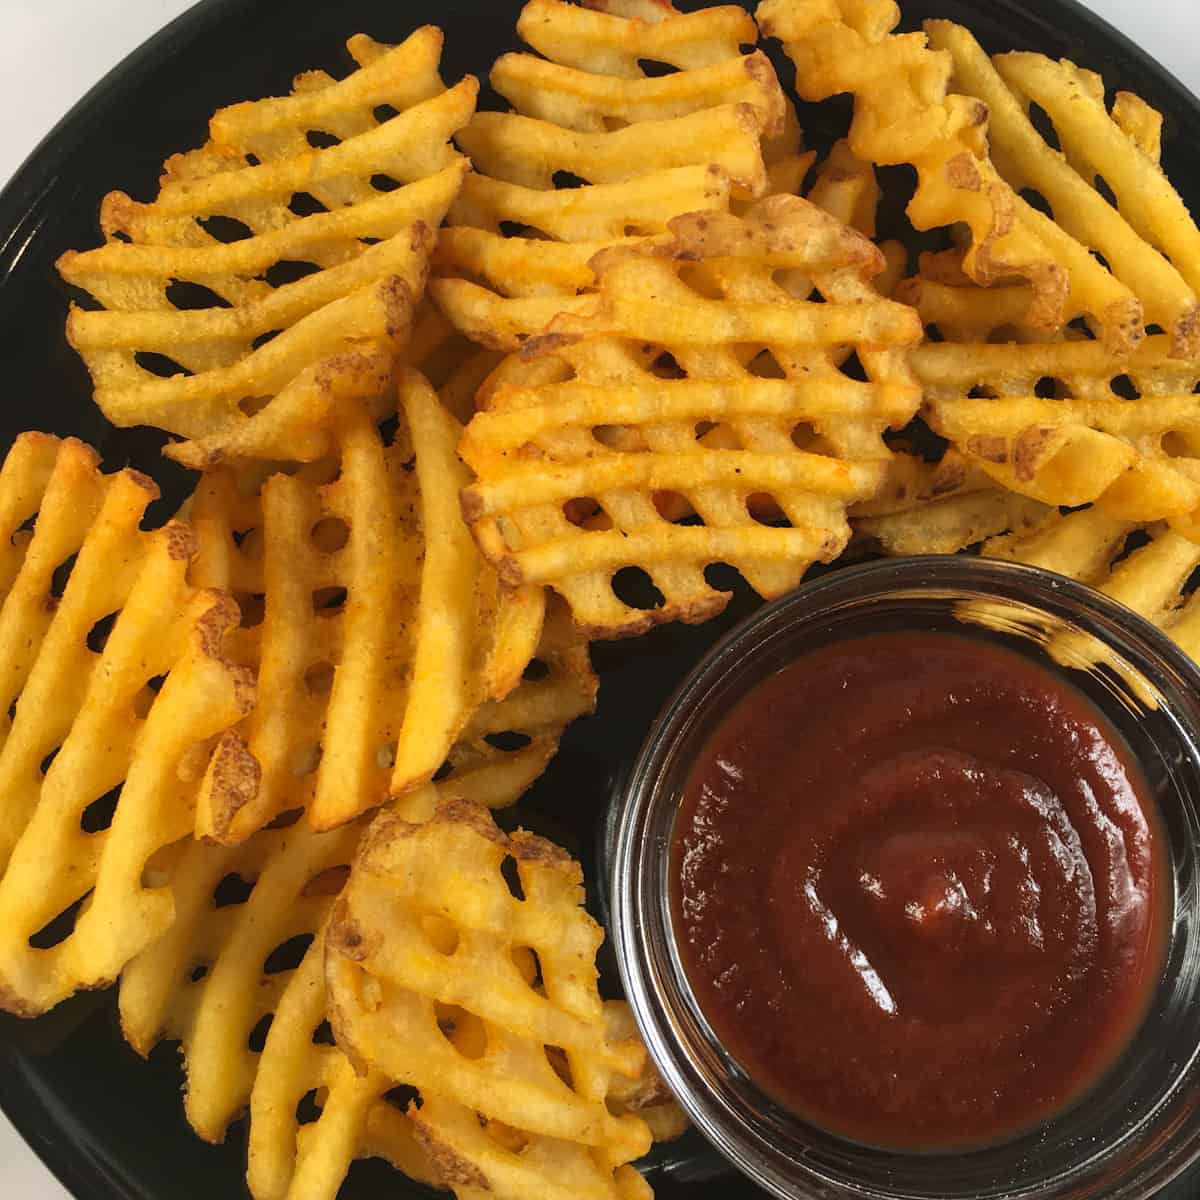 https://summeryule.com/wp-content/uploads/2021/10/air-fryer-frozen-waffle-fries.jpeg